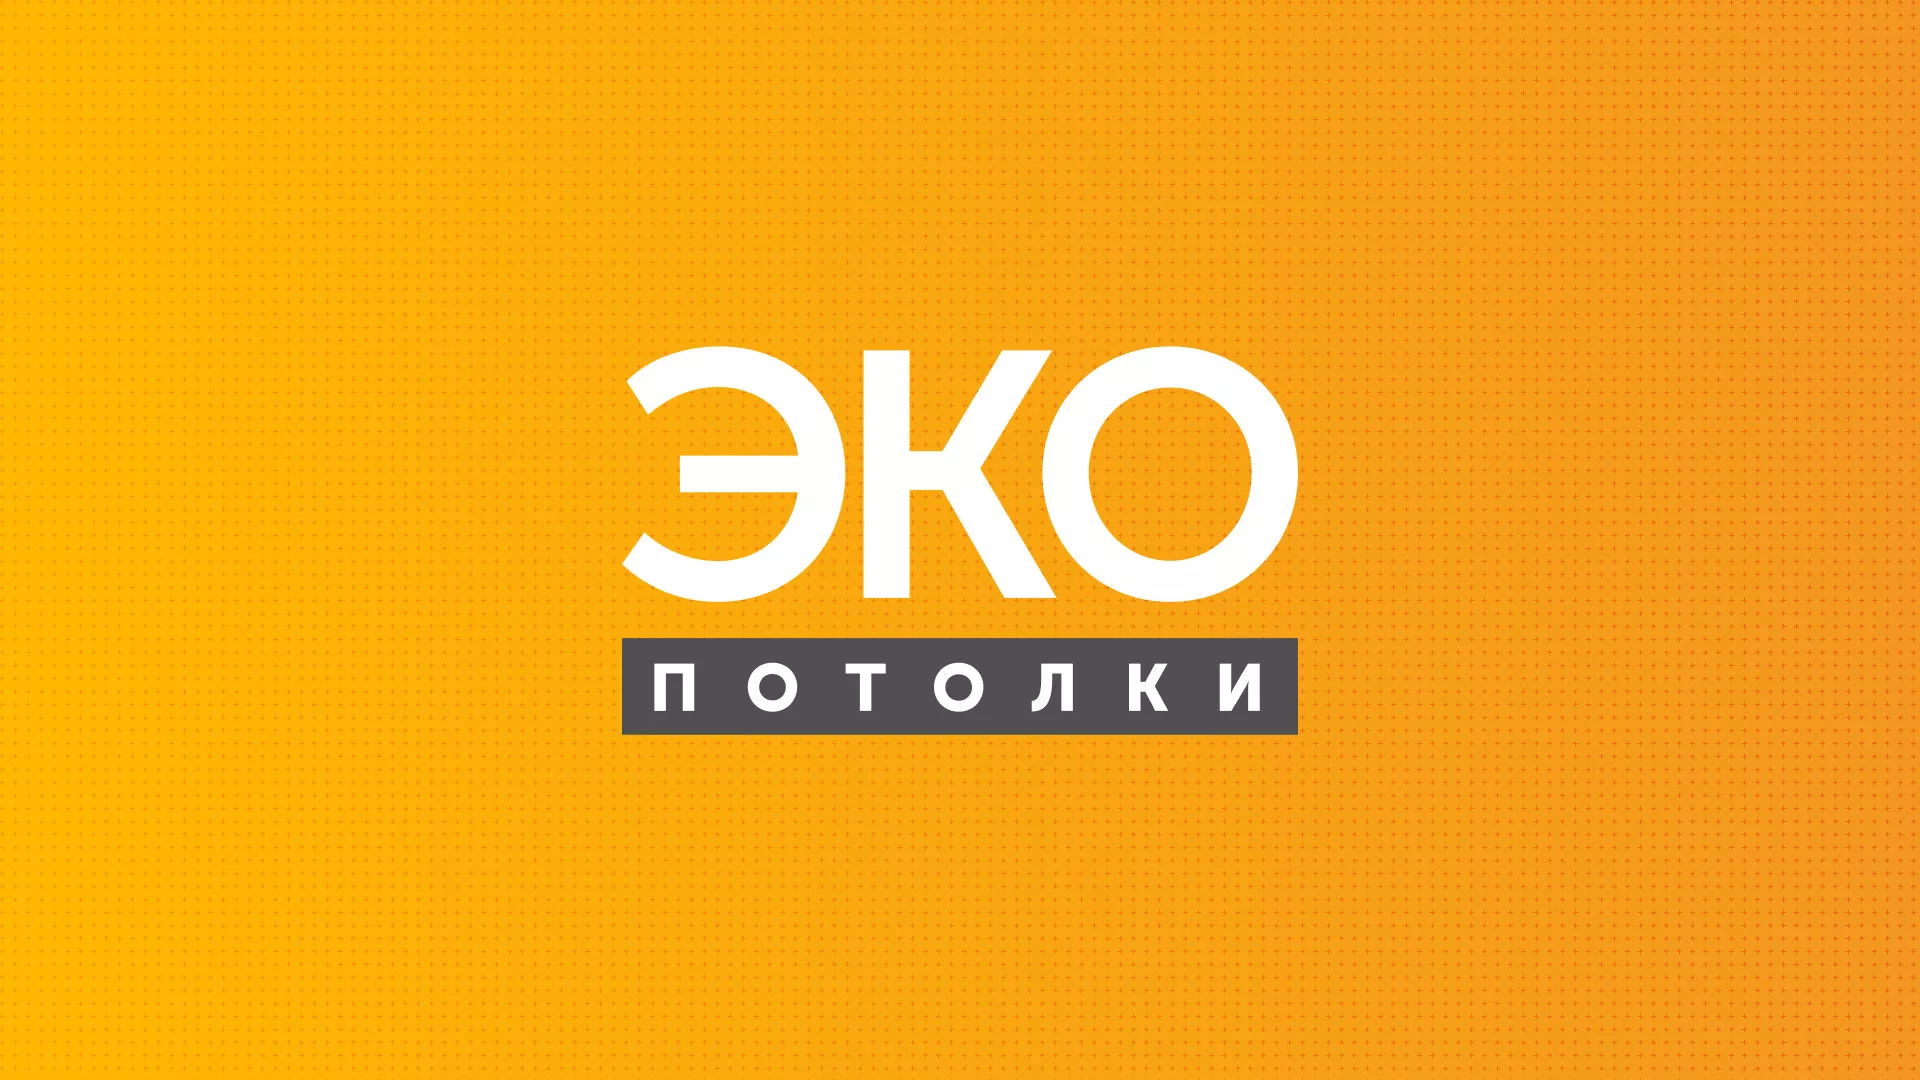 Разработка сайта по натяжным потолкам «Эко Потолки» в Наро-Фоминске